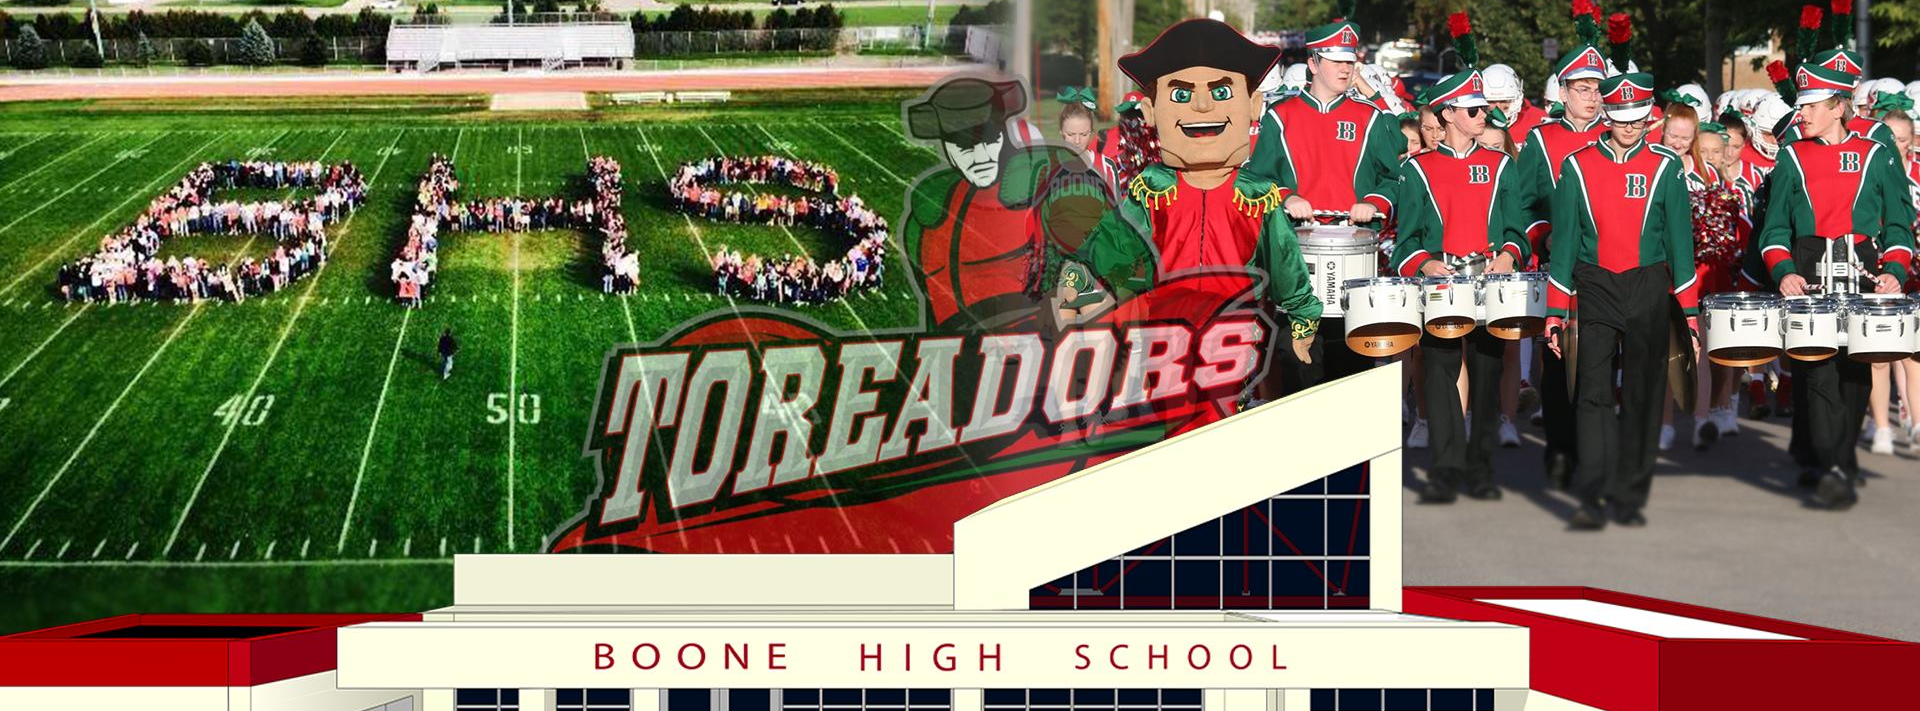 Boone High School